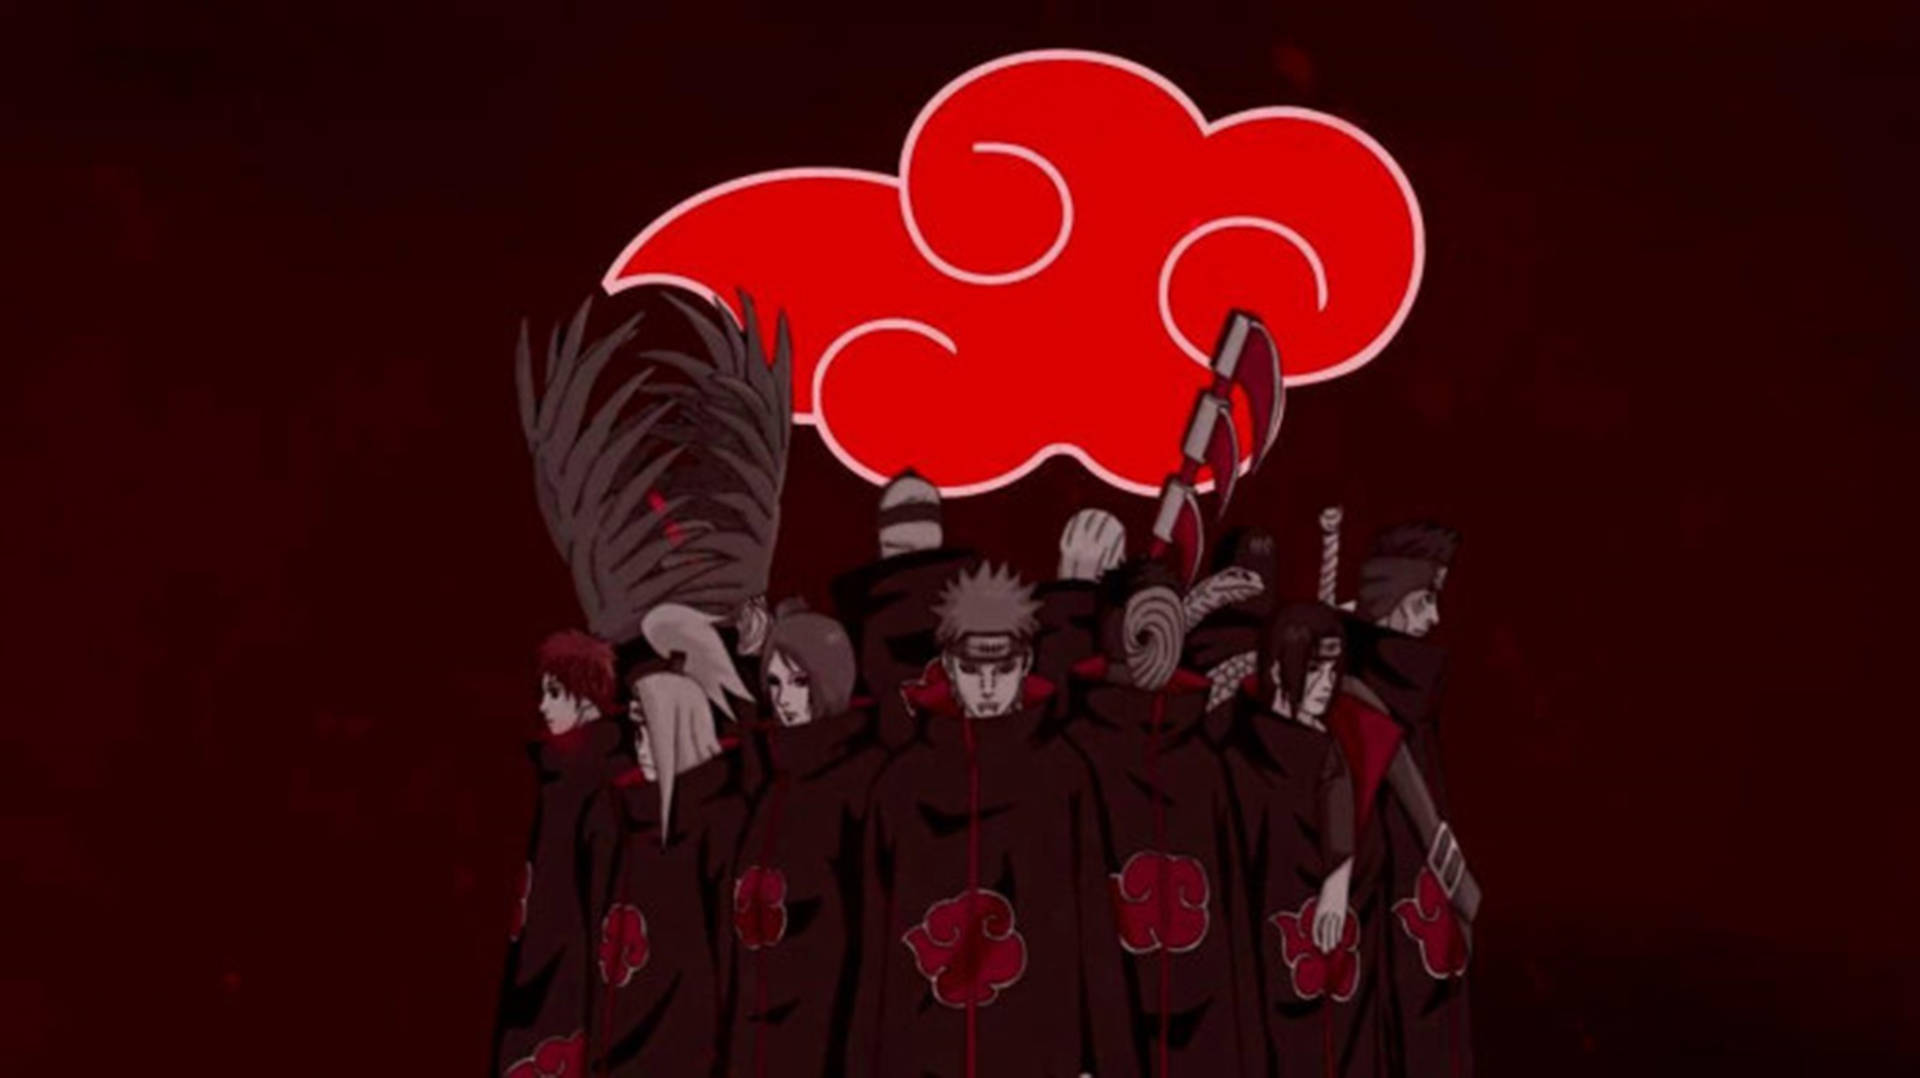 Caption: Fierce Akatsuki Logo With Shinobi Ninjas In Battle Stance Background